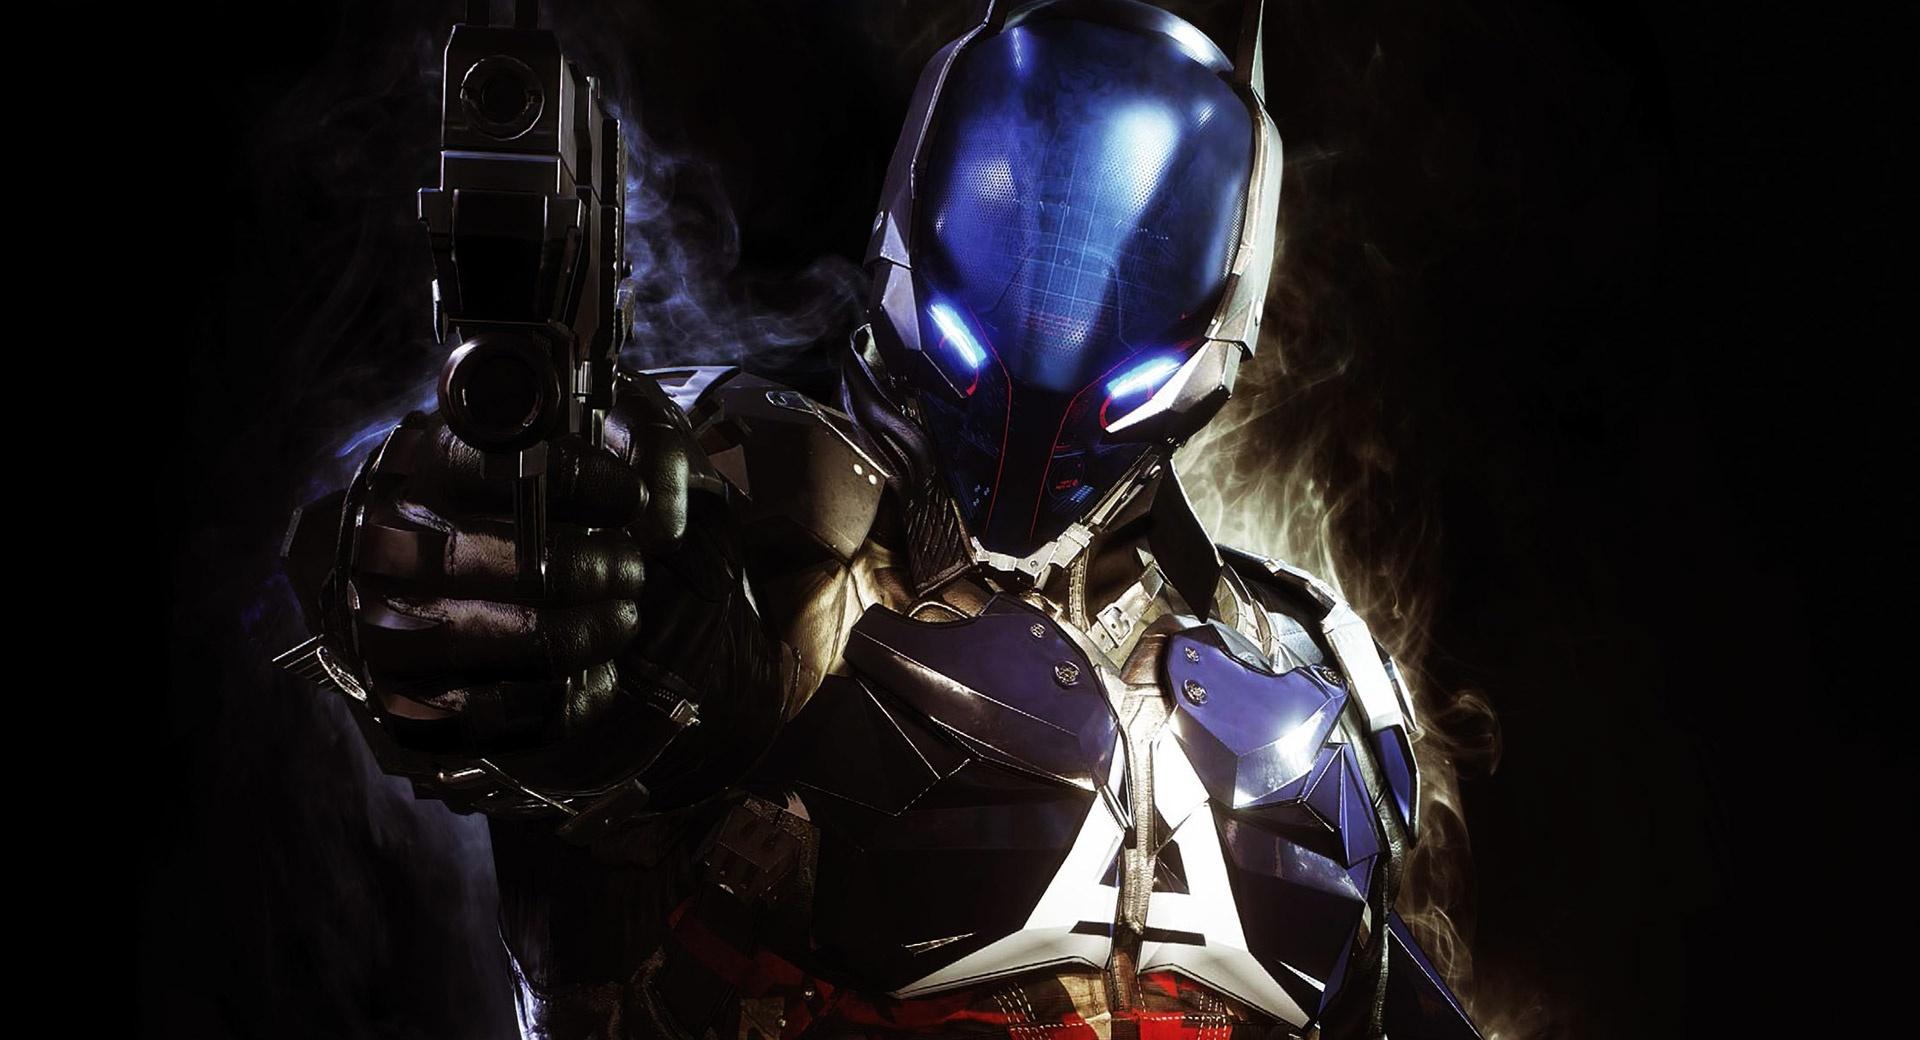 Batman Arkham Knight Pointing Gun at 1600 x 1200 size wallpapers HD quality